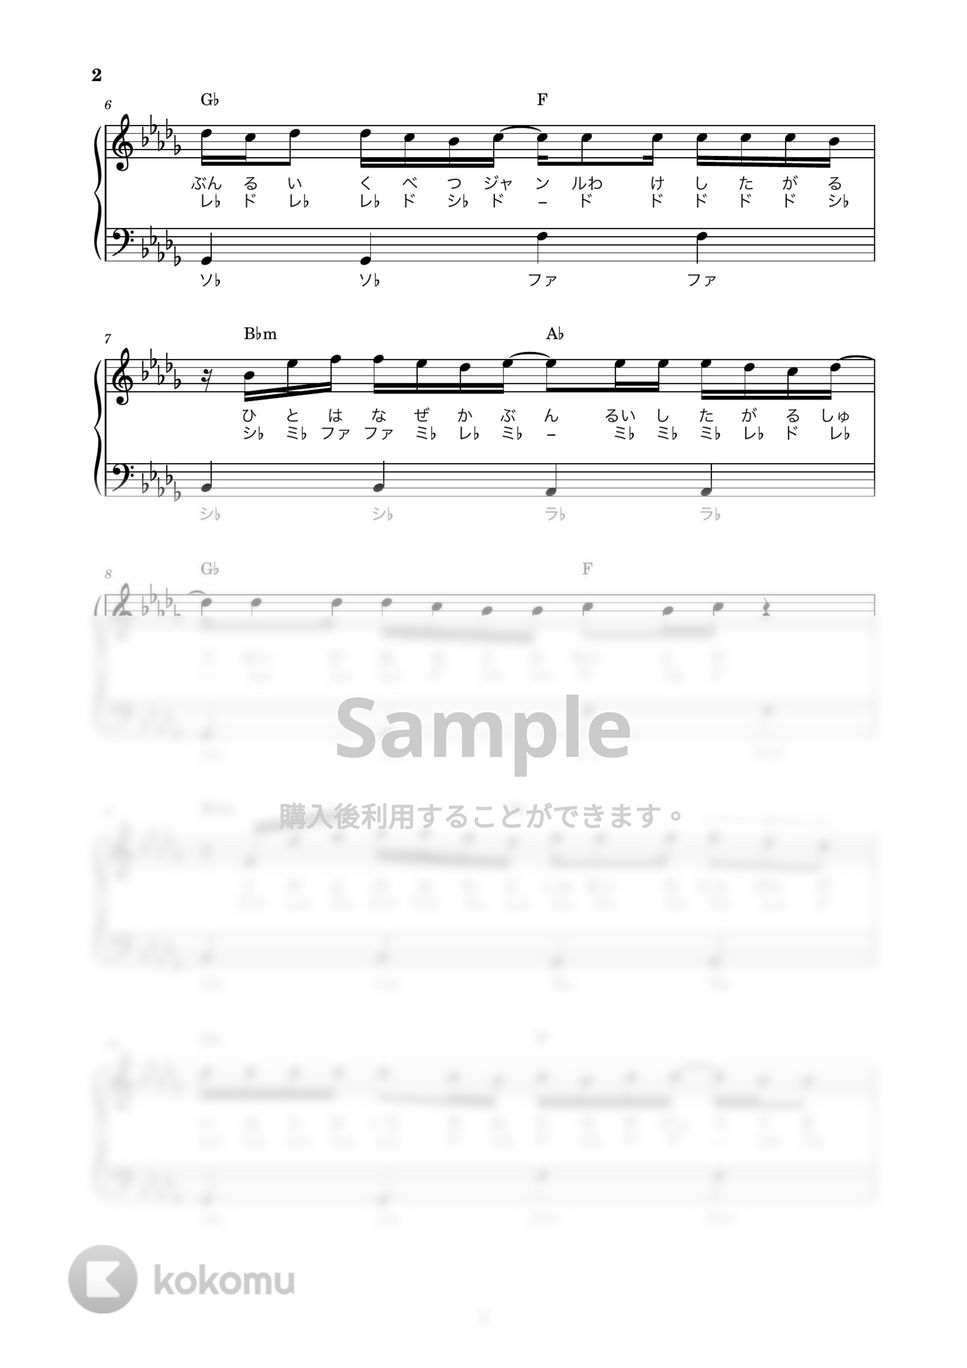 SEKAI NO OWARI - Habit (かんたん / 歌詞付き / ドレミ付き / 初心者) by piano.tokyo